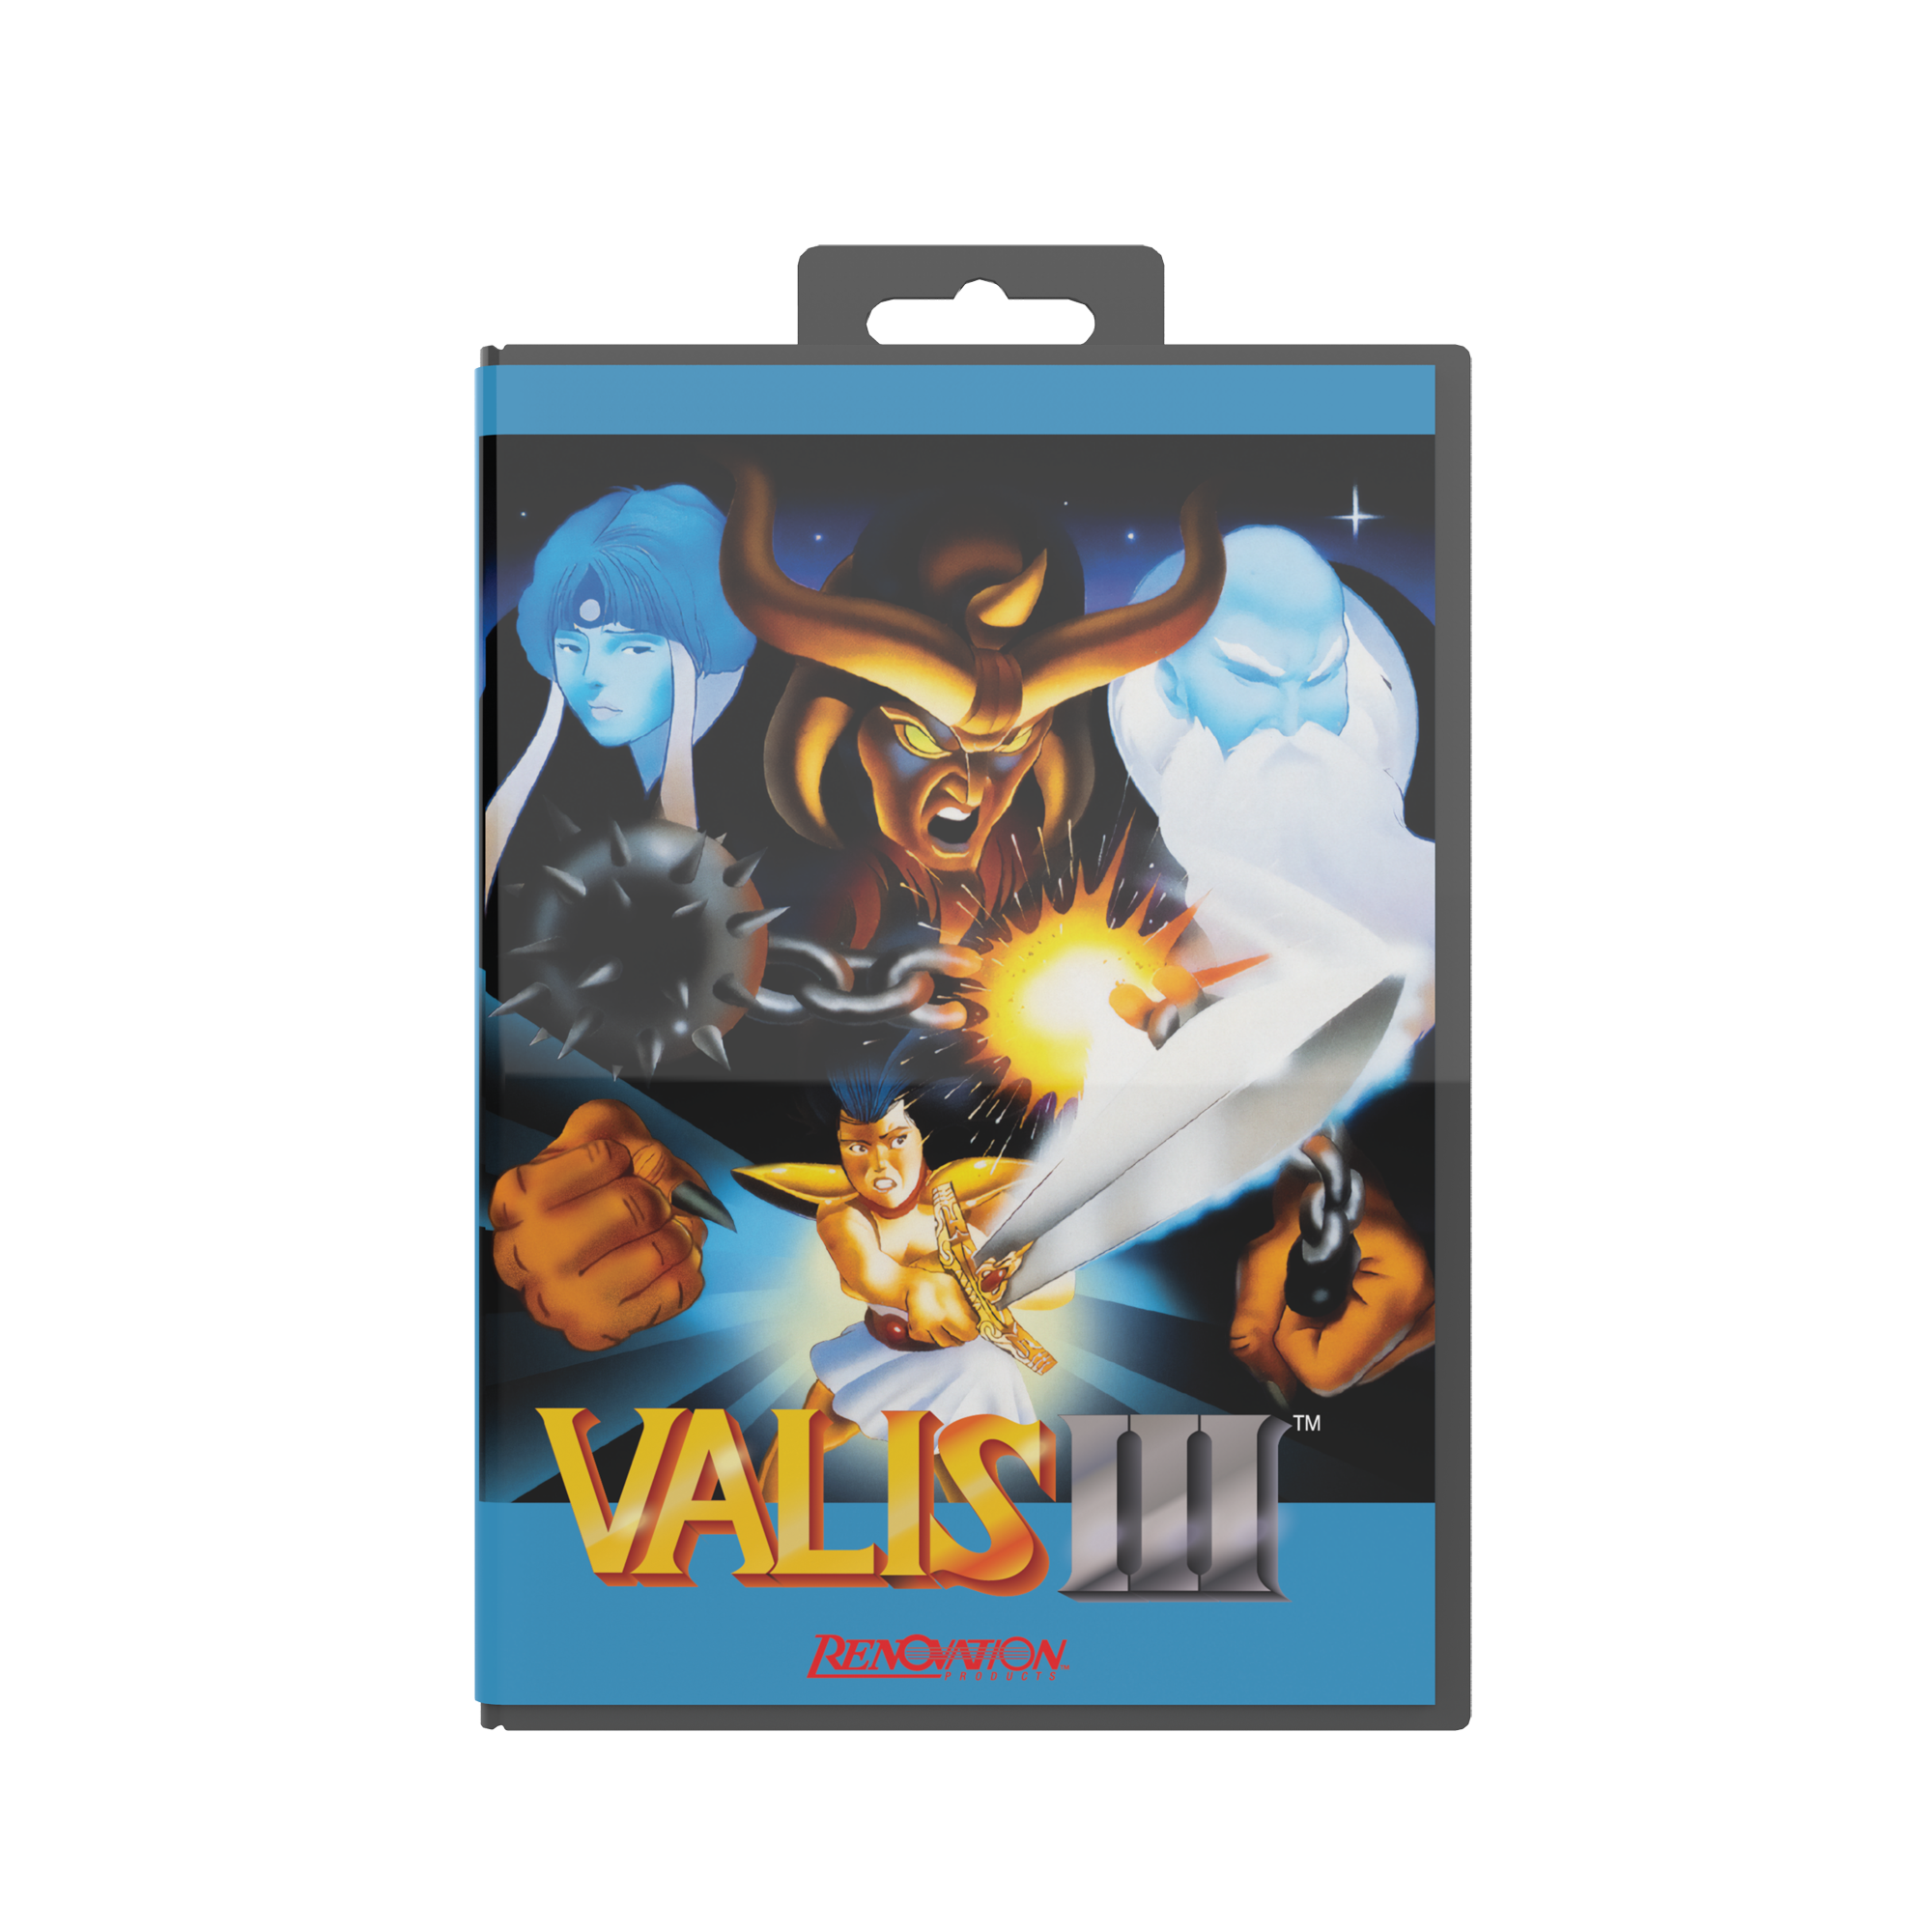 ValisCollectionPressKit Valis III Cover B 00.png